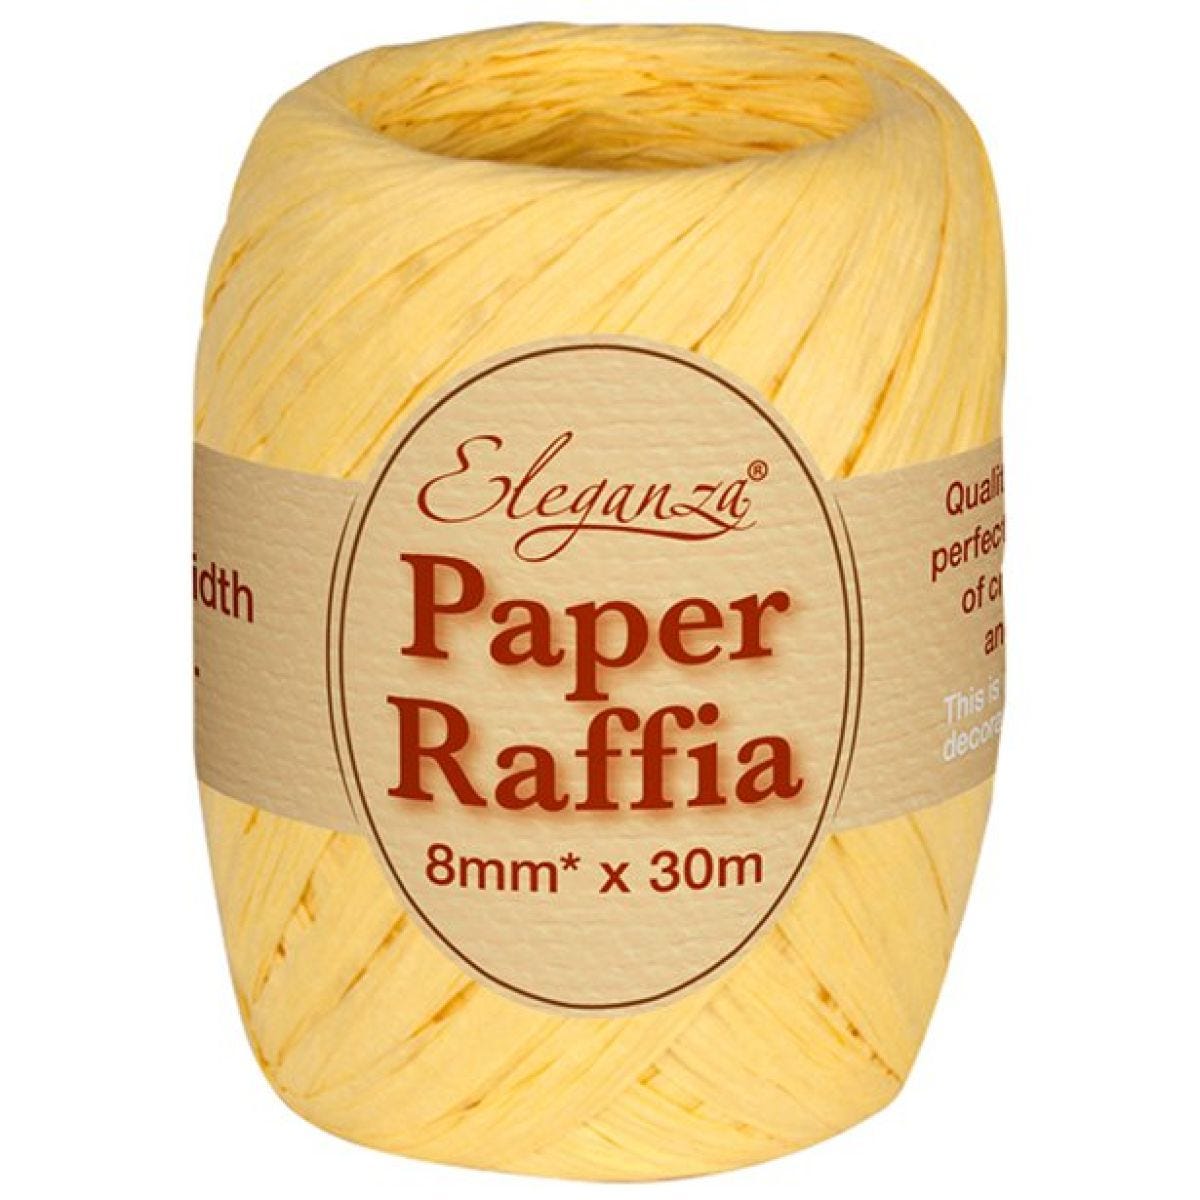 Pastel Yellow Paper Raffia - 30m